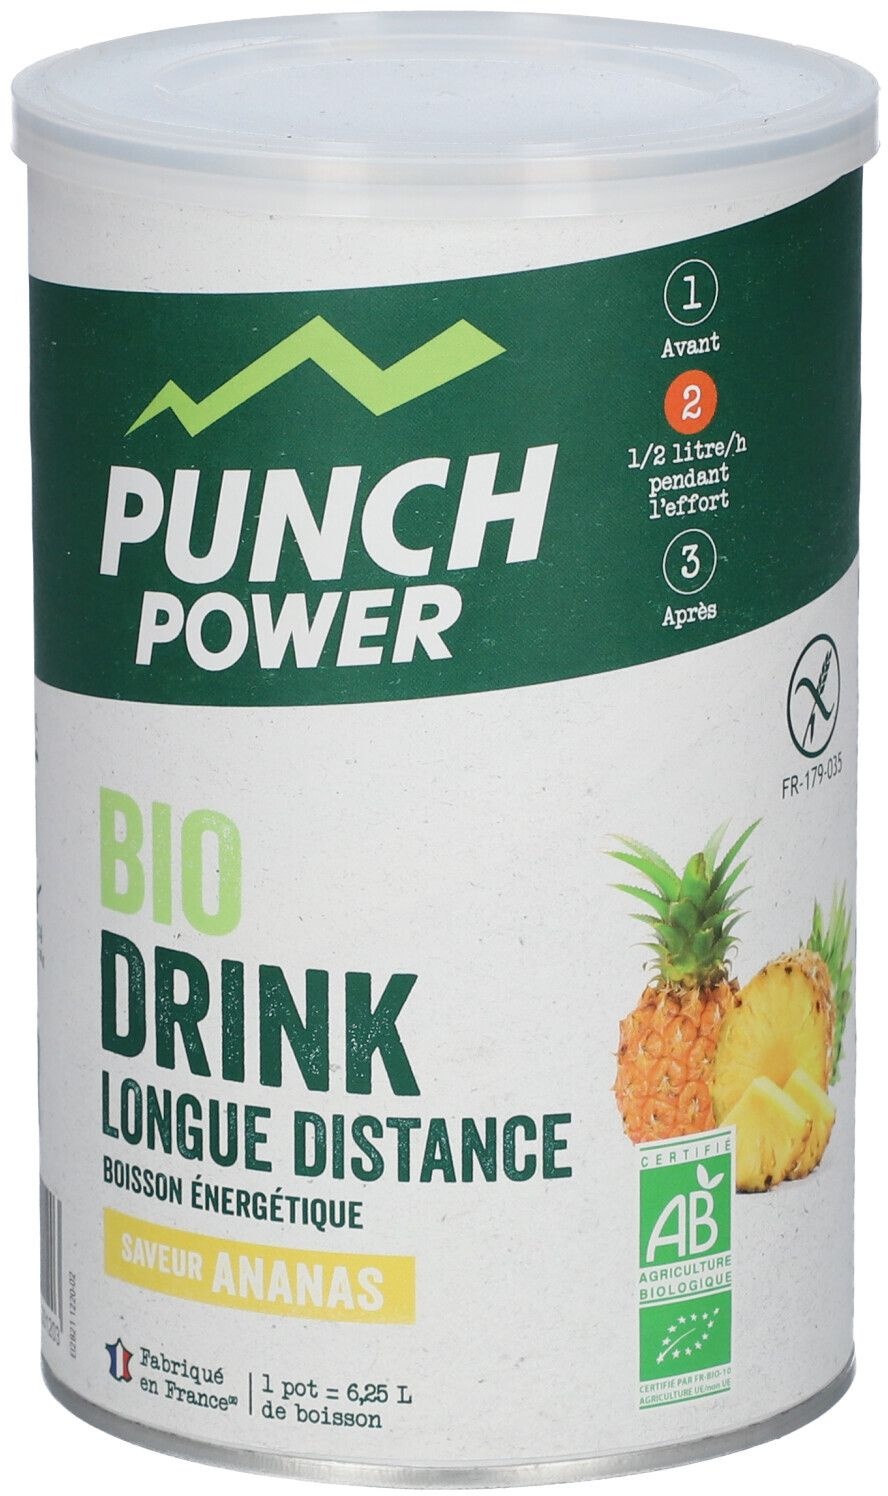 PUNCH POWER Biodrink Longue distance saveur Ananans 500 g Poudre